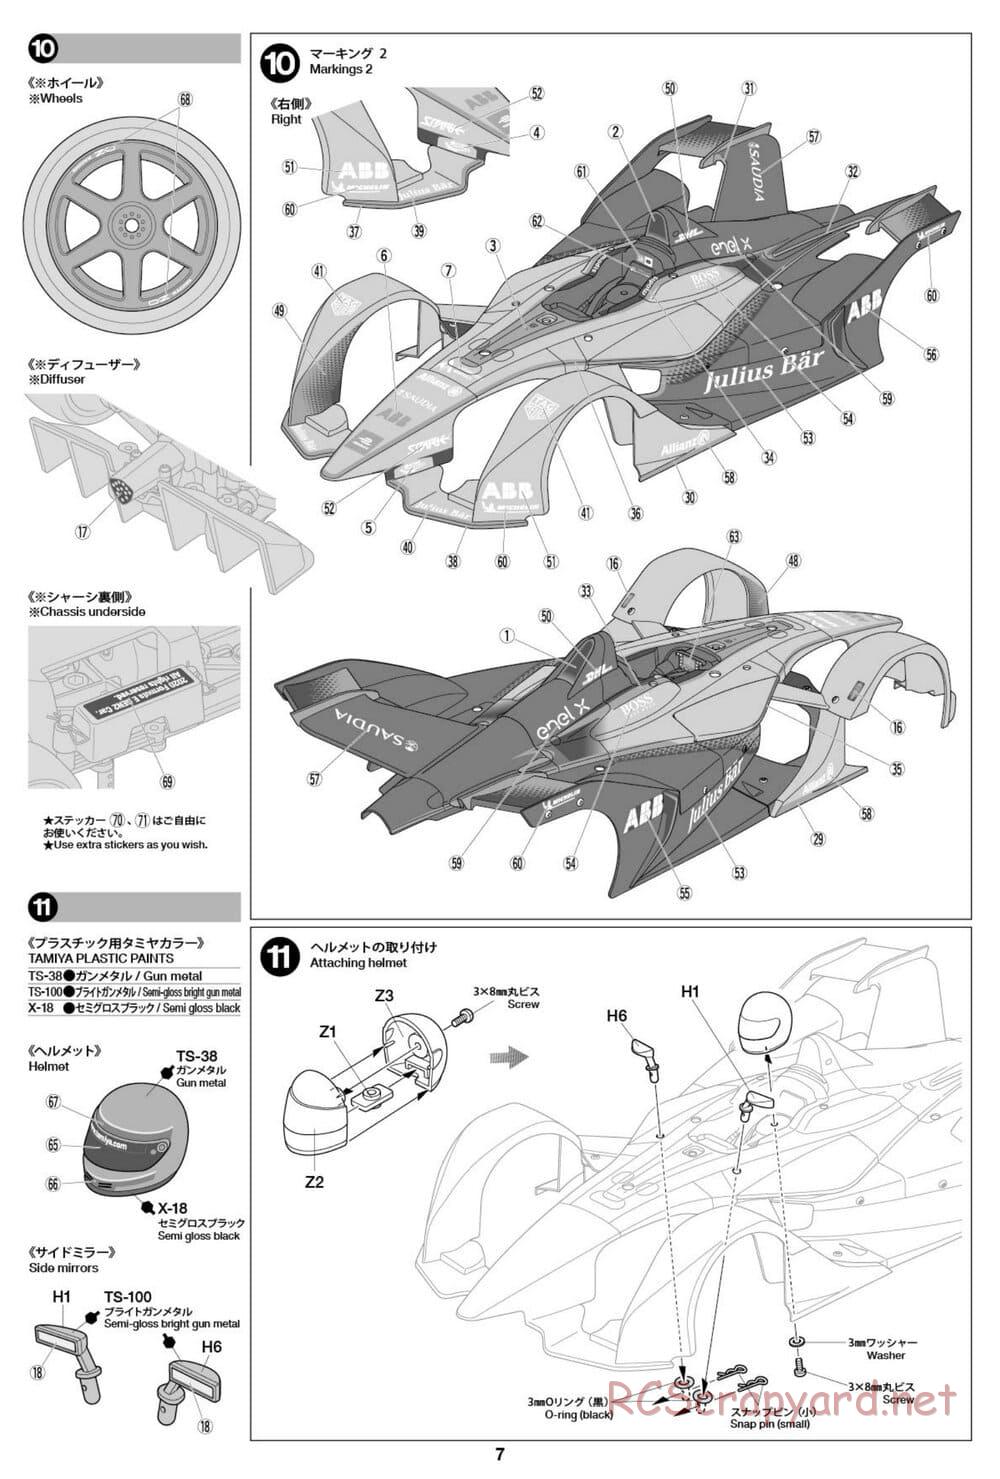 Tamiya - Formula E Gen2 Car - Championship Livery - TC-01 Chassis - Body Manual - Page 7